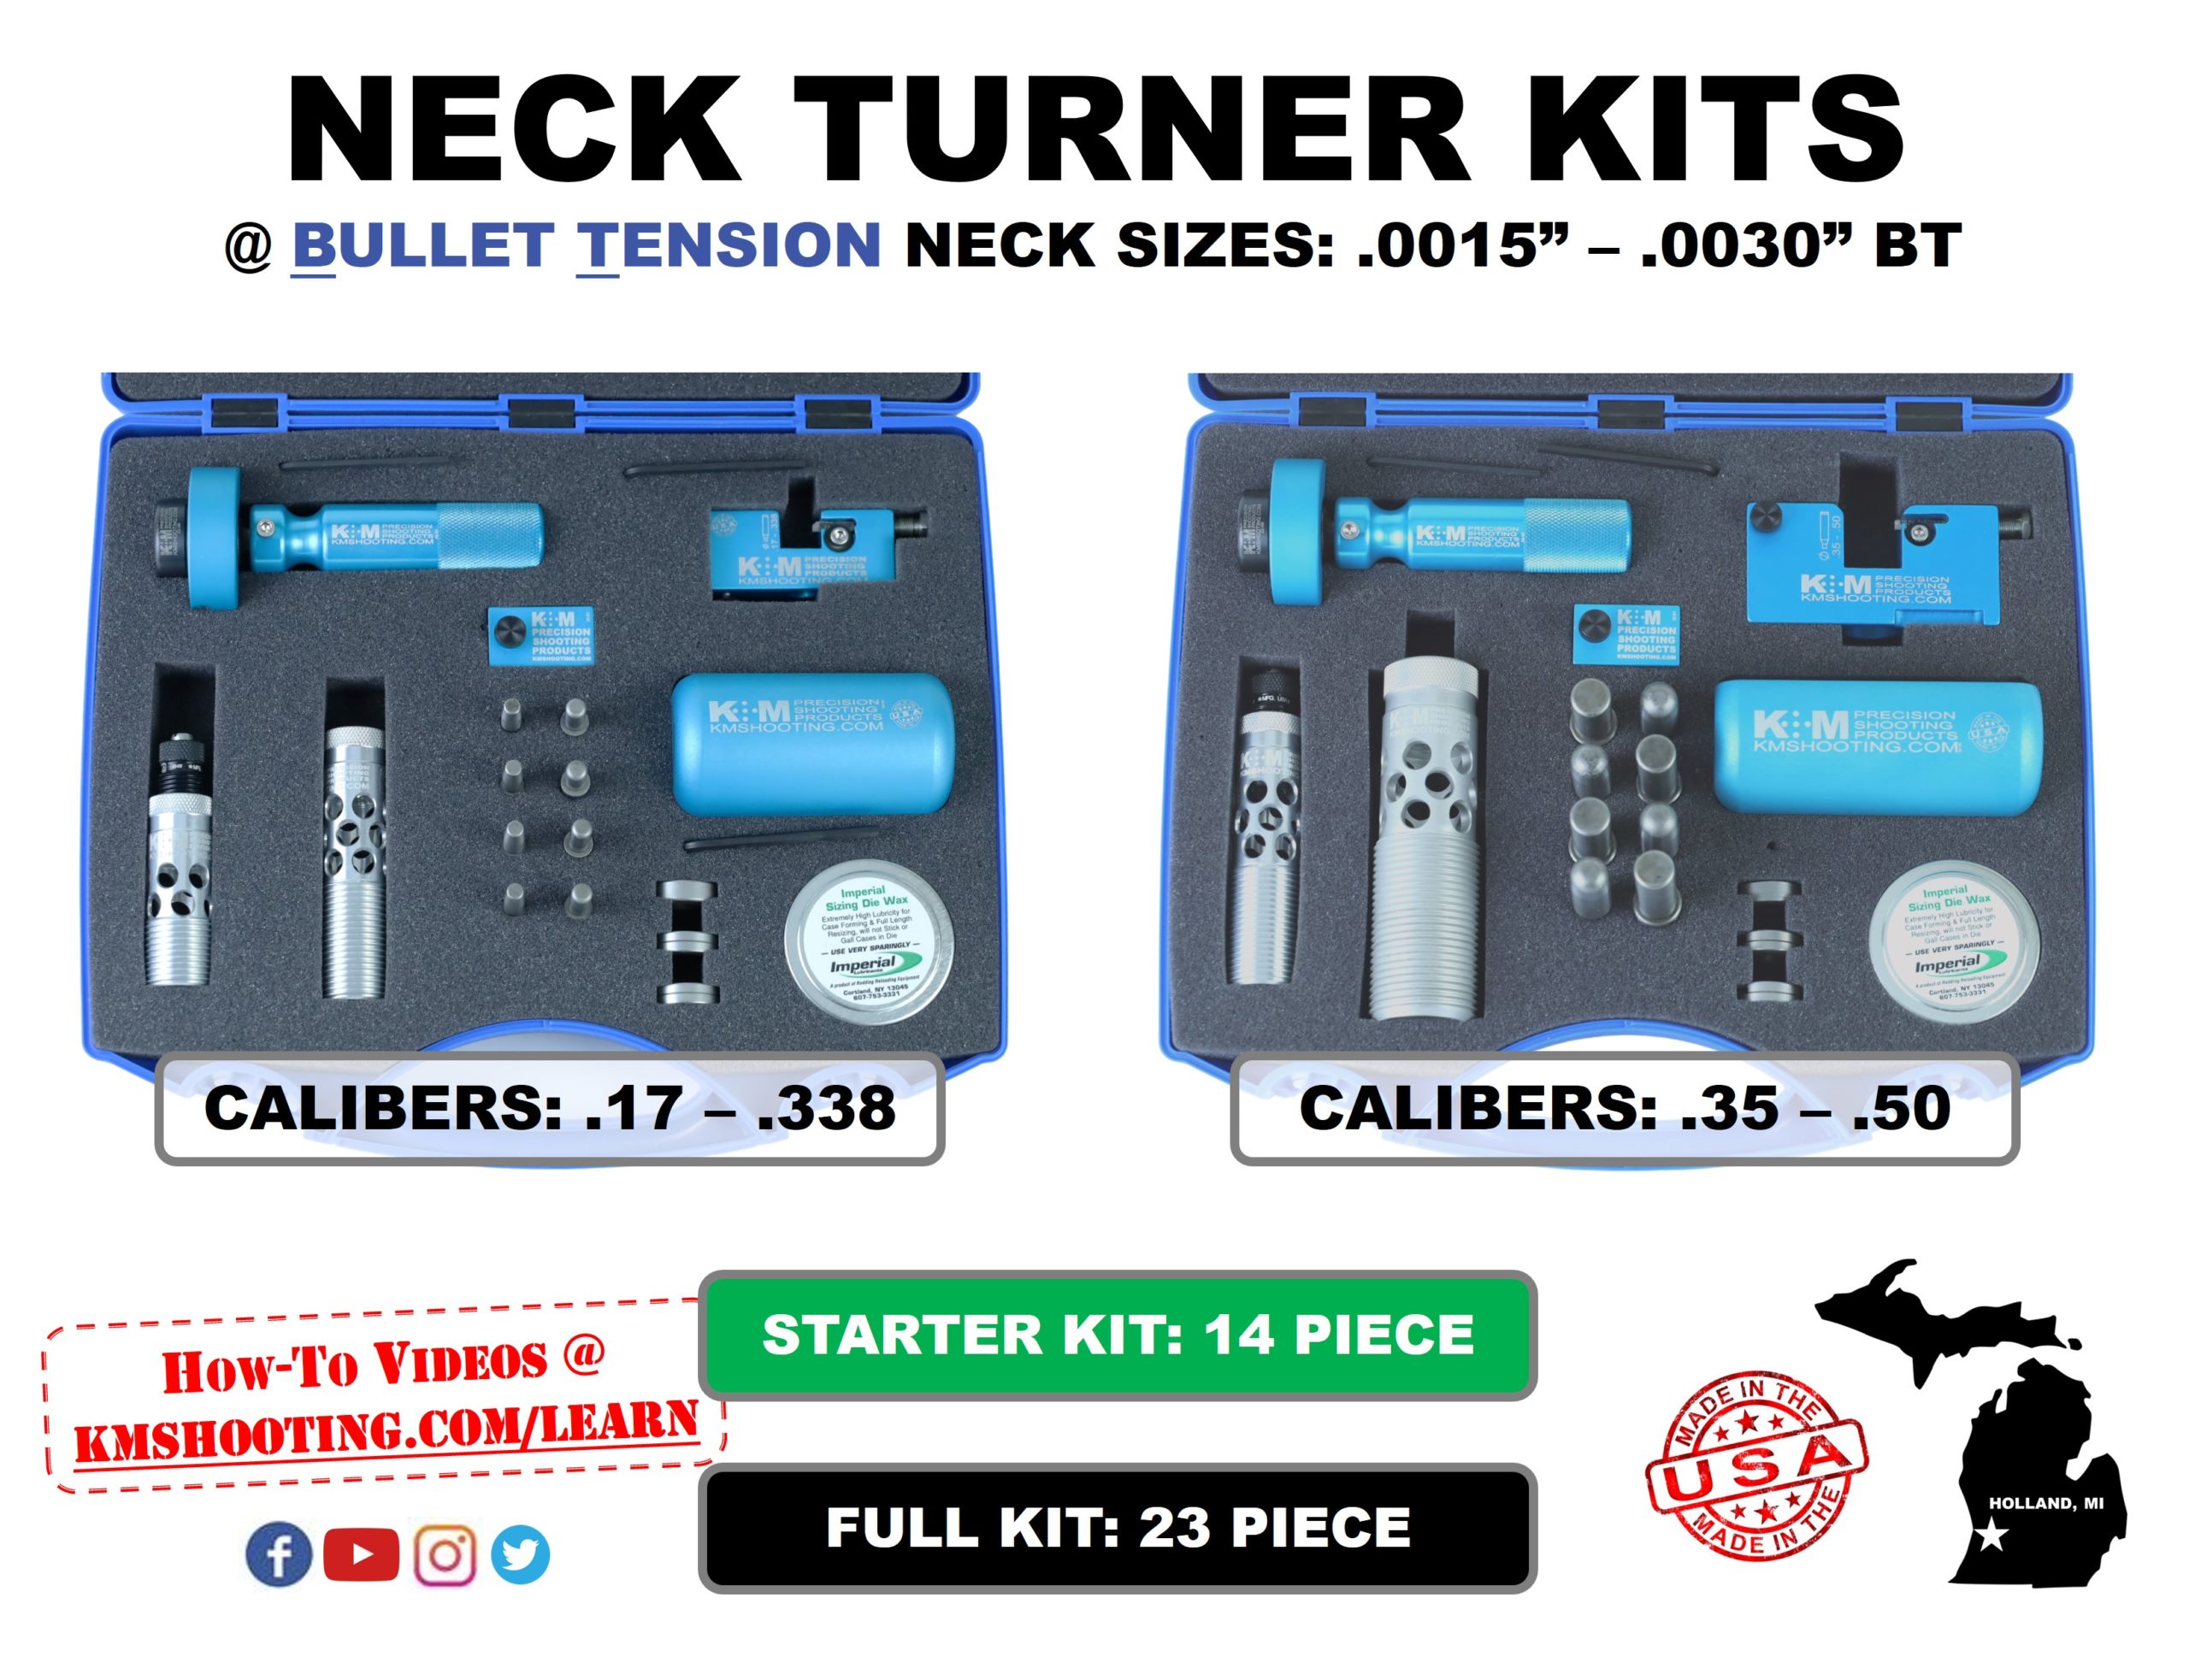 Neck-Turner-Kits-scaled.jpg